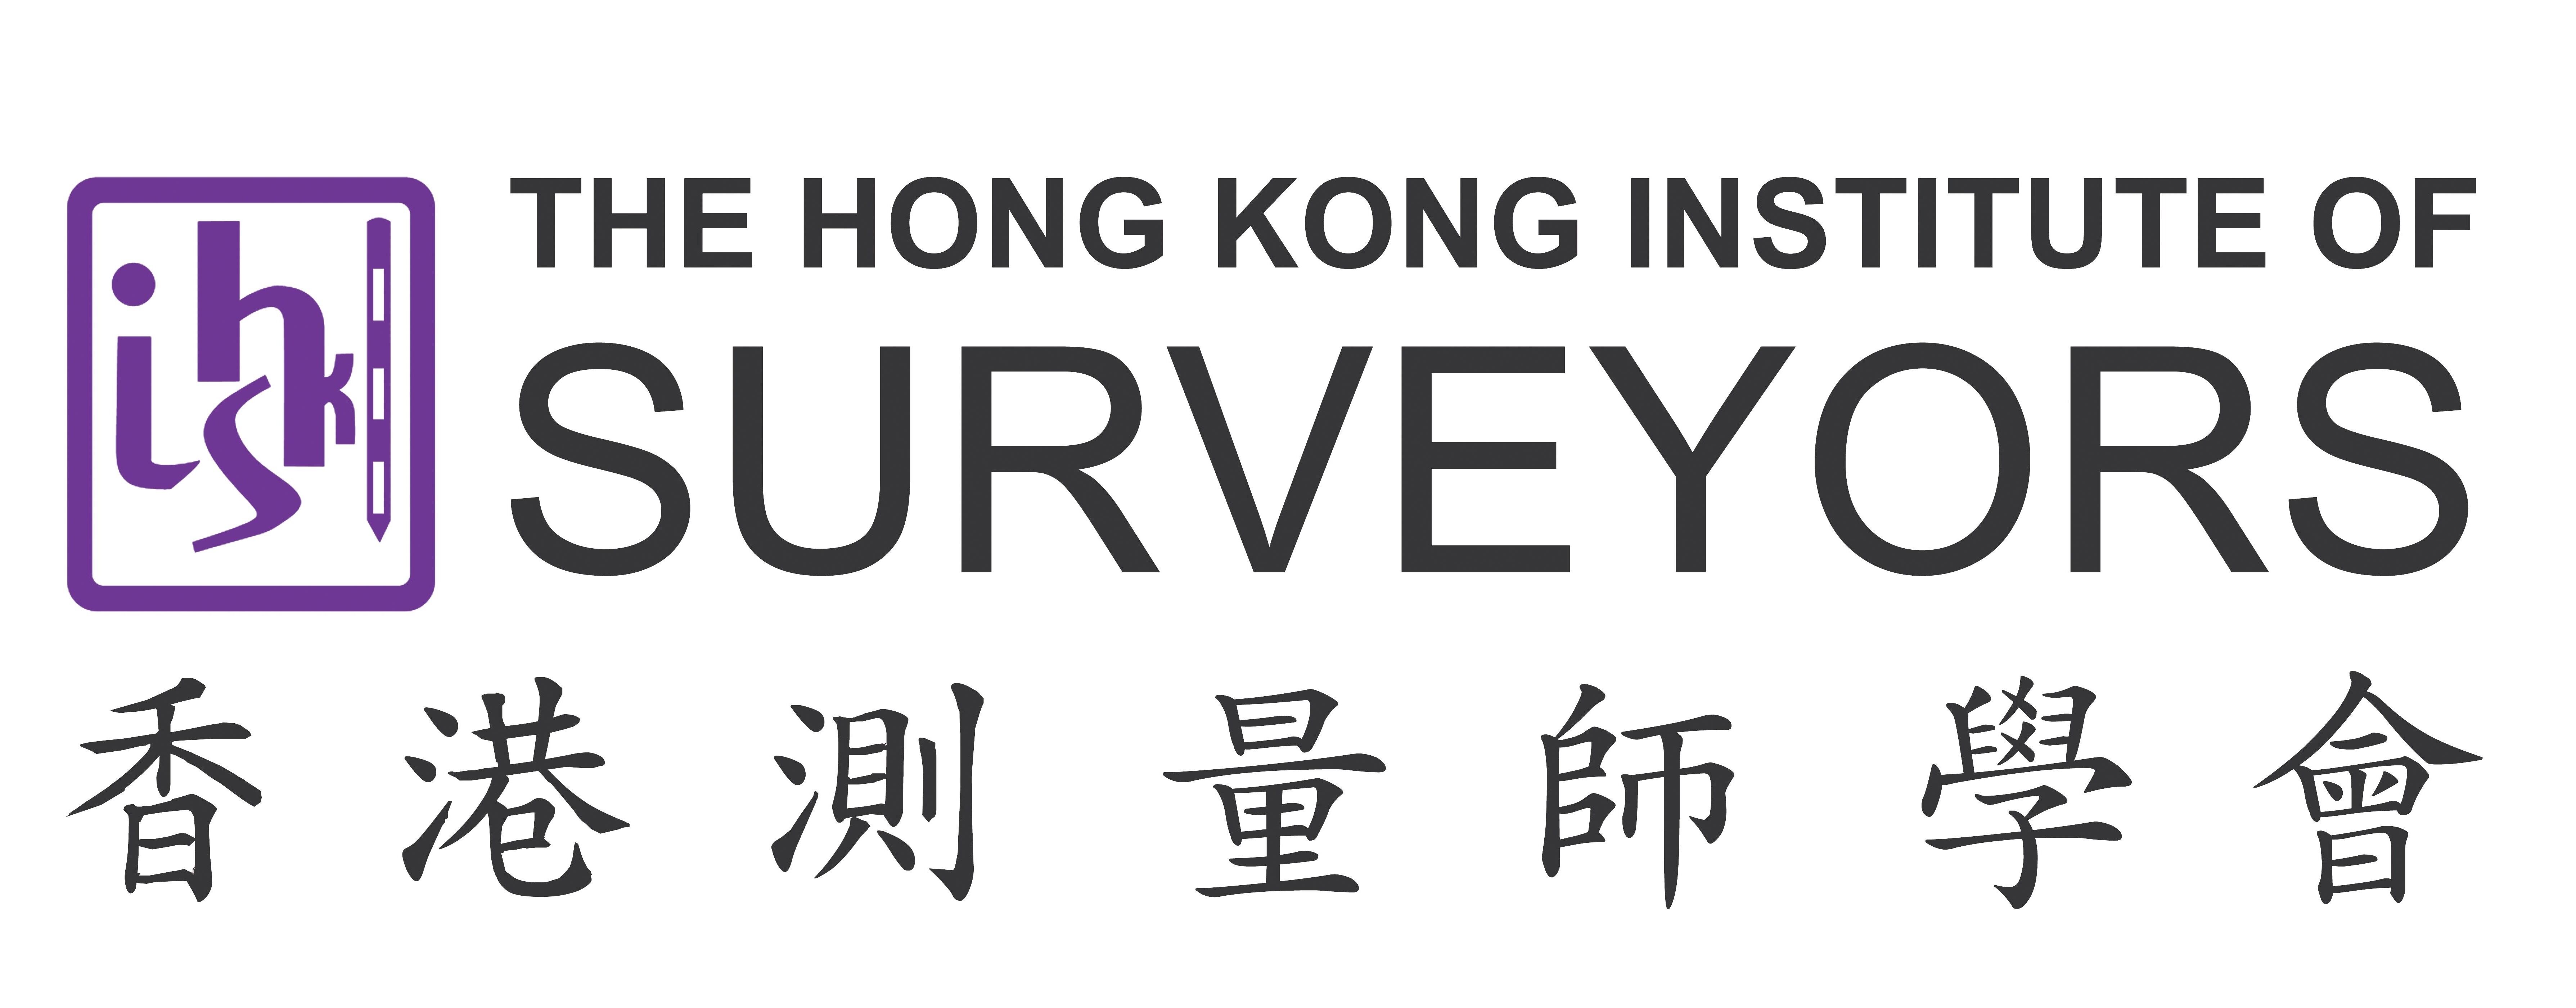 The Hong Kong Institute of Surveyors logo